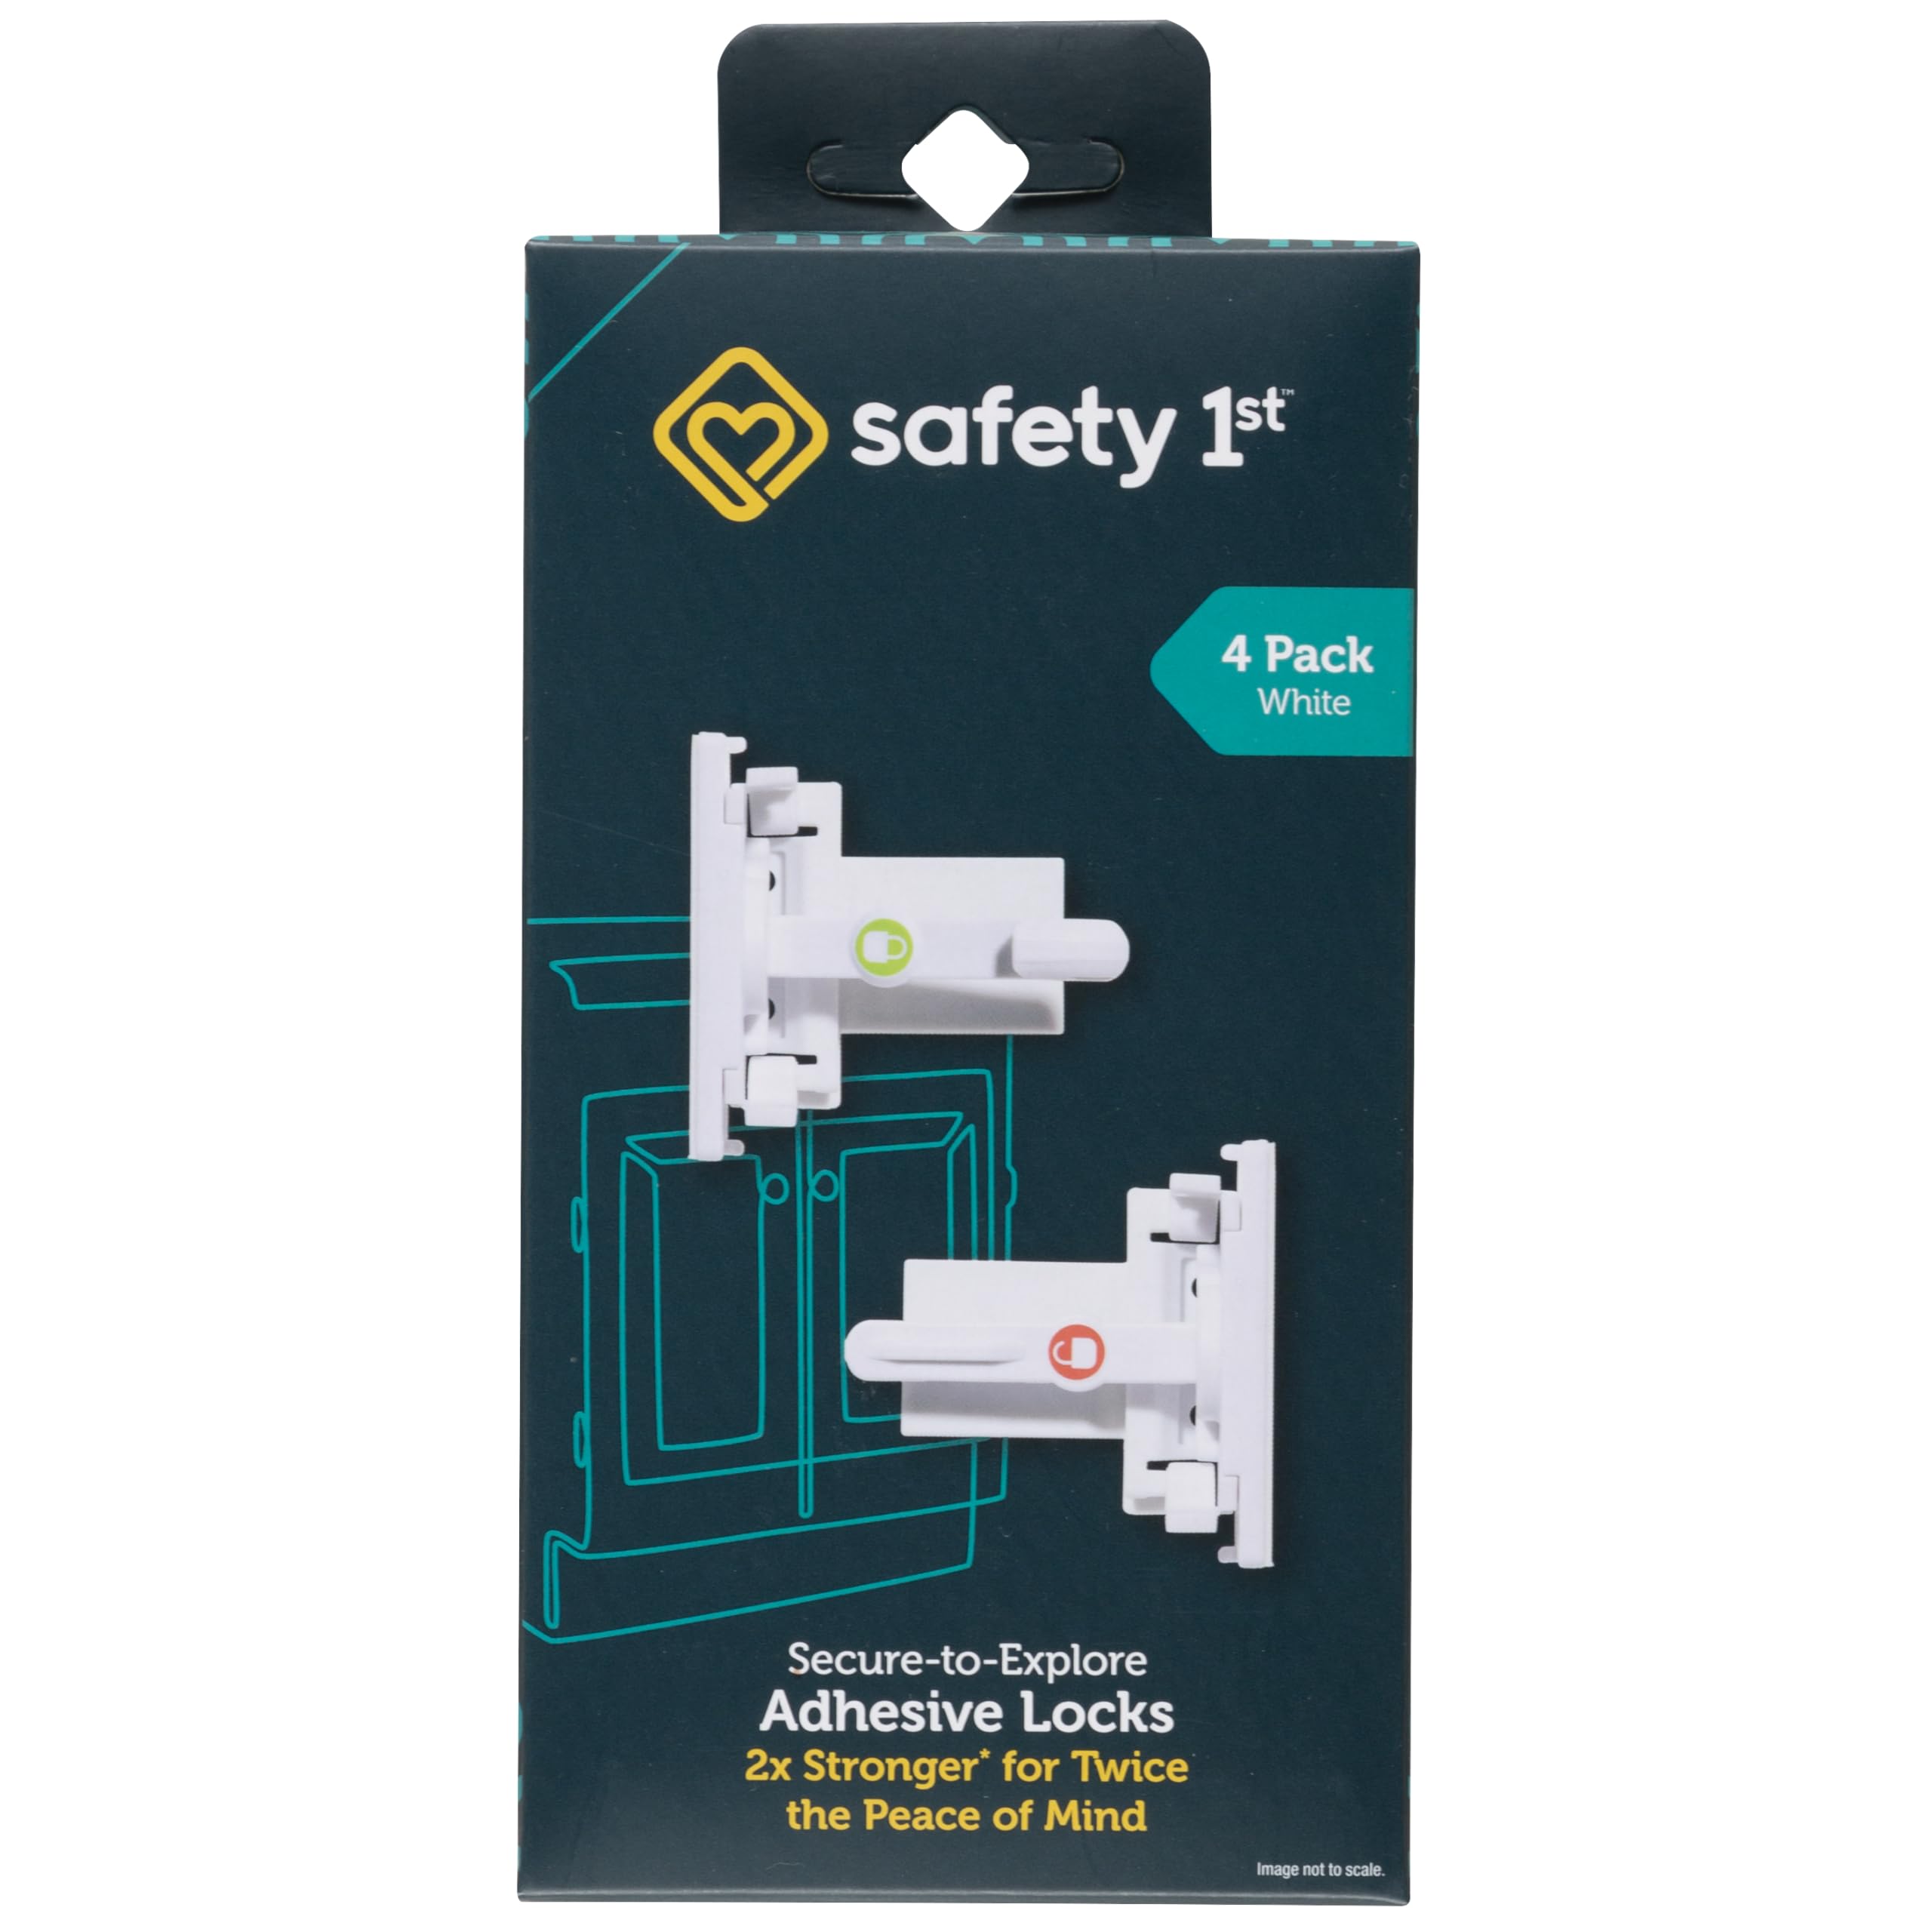 Safety 1st¨ Secure-to-Explore Adhesive Locks (4 Locks), White